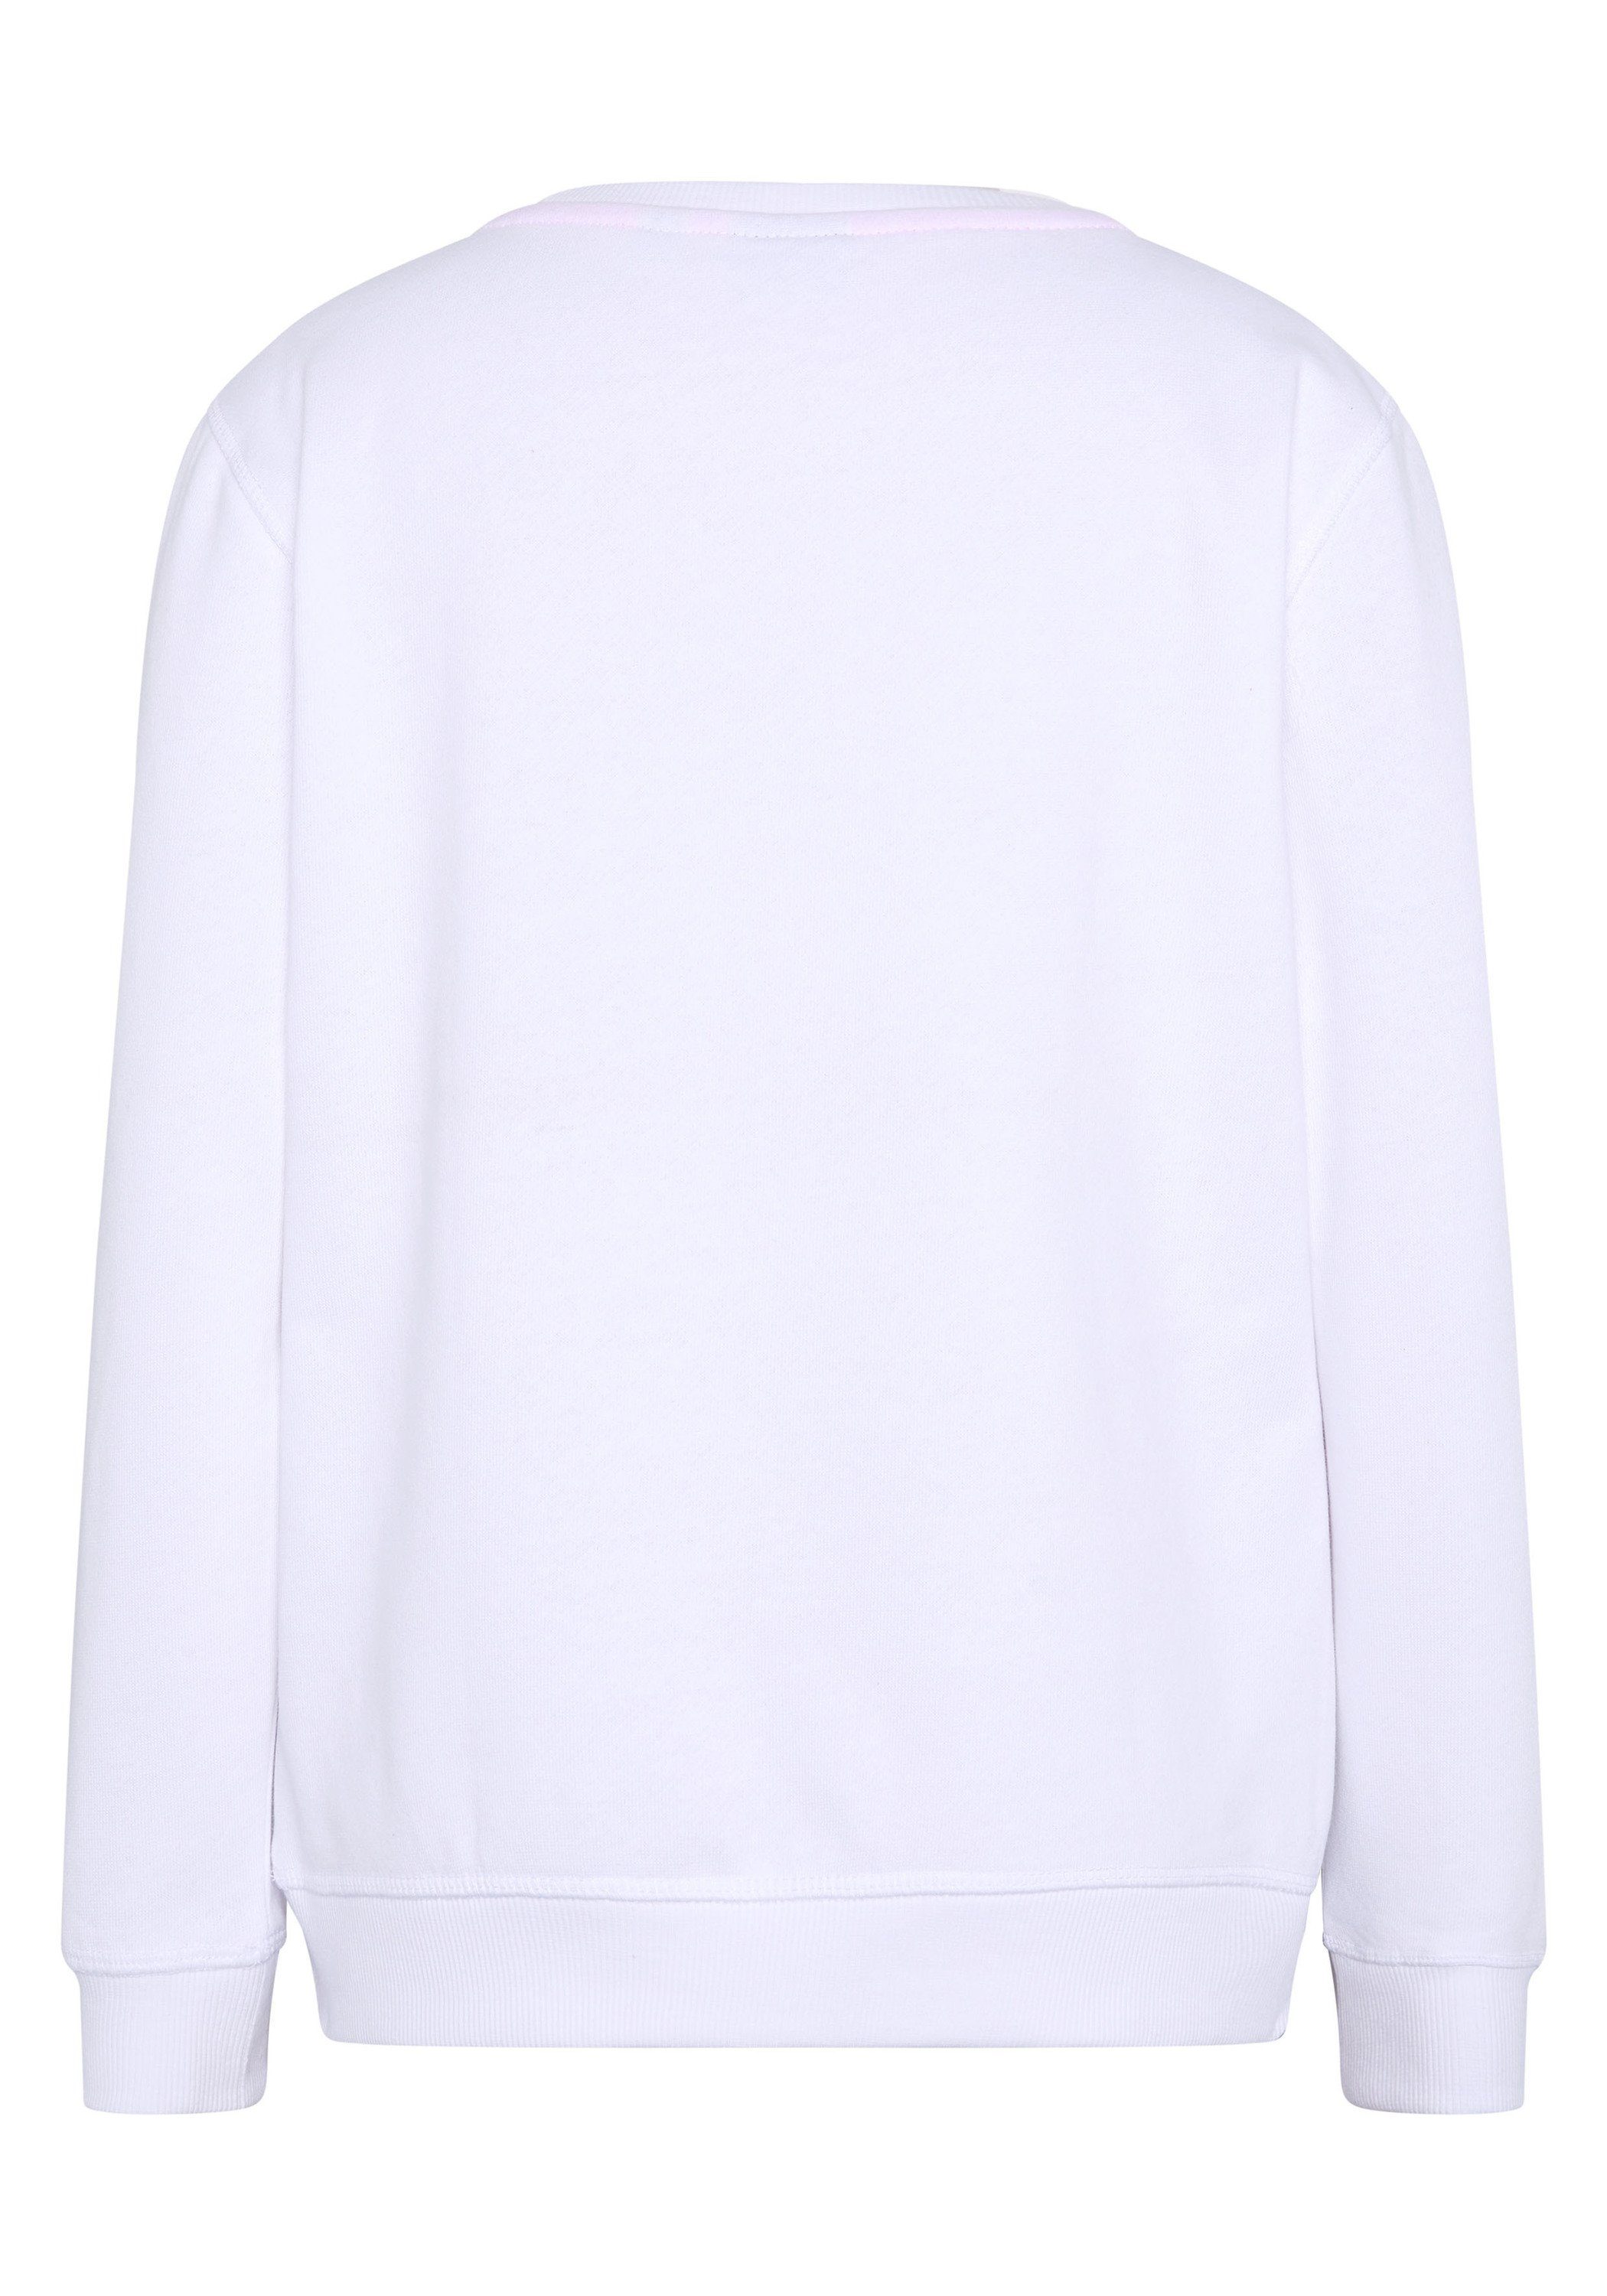 Polo Sylt mit floralem Bright 11-0601 Sweatshirt White Logodesign